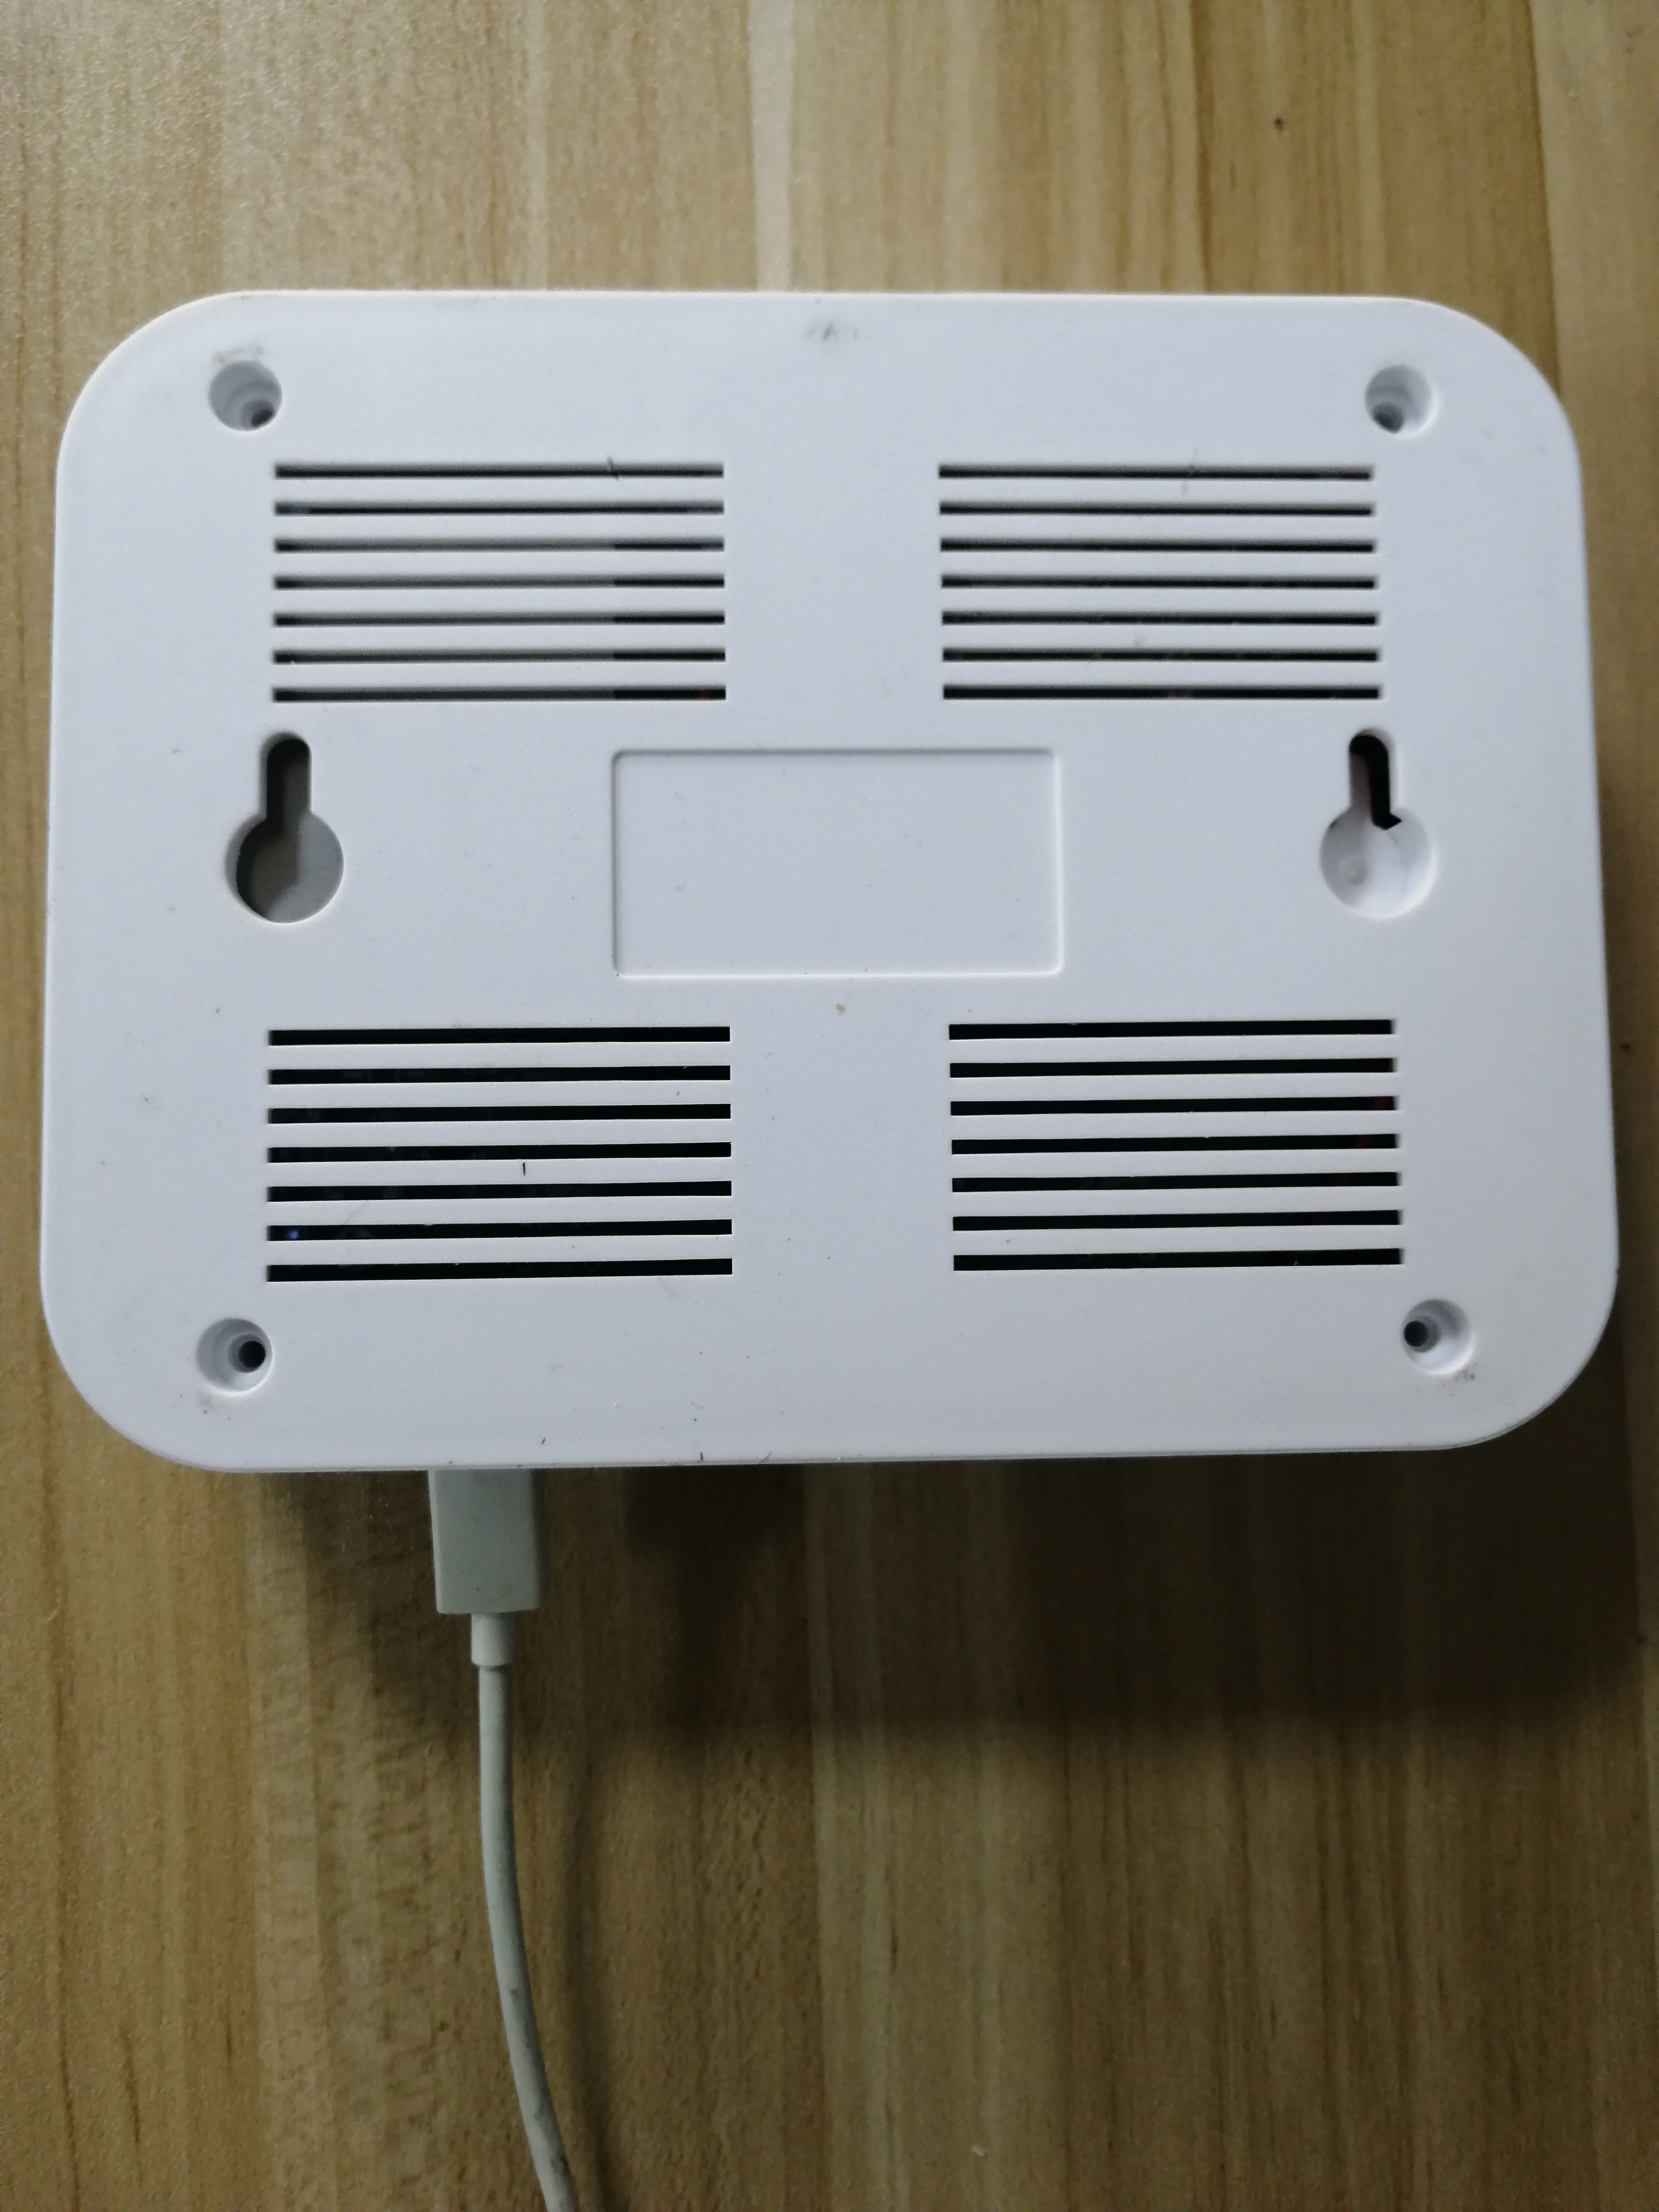 LCD 九合一空气质量环境检测变送器(WiFi)图片